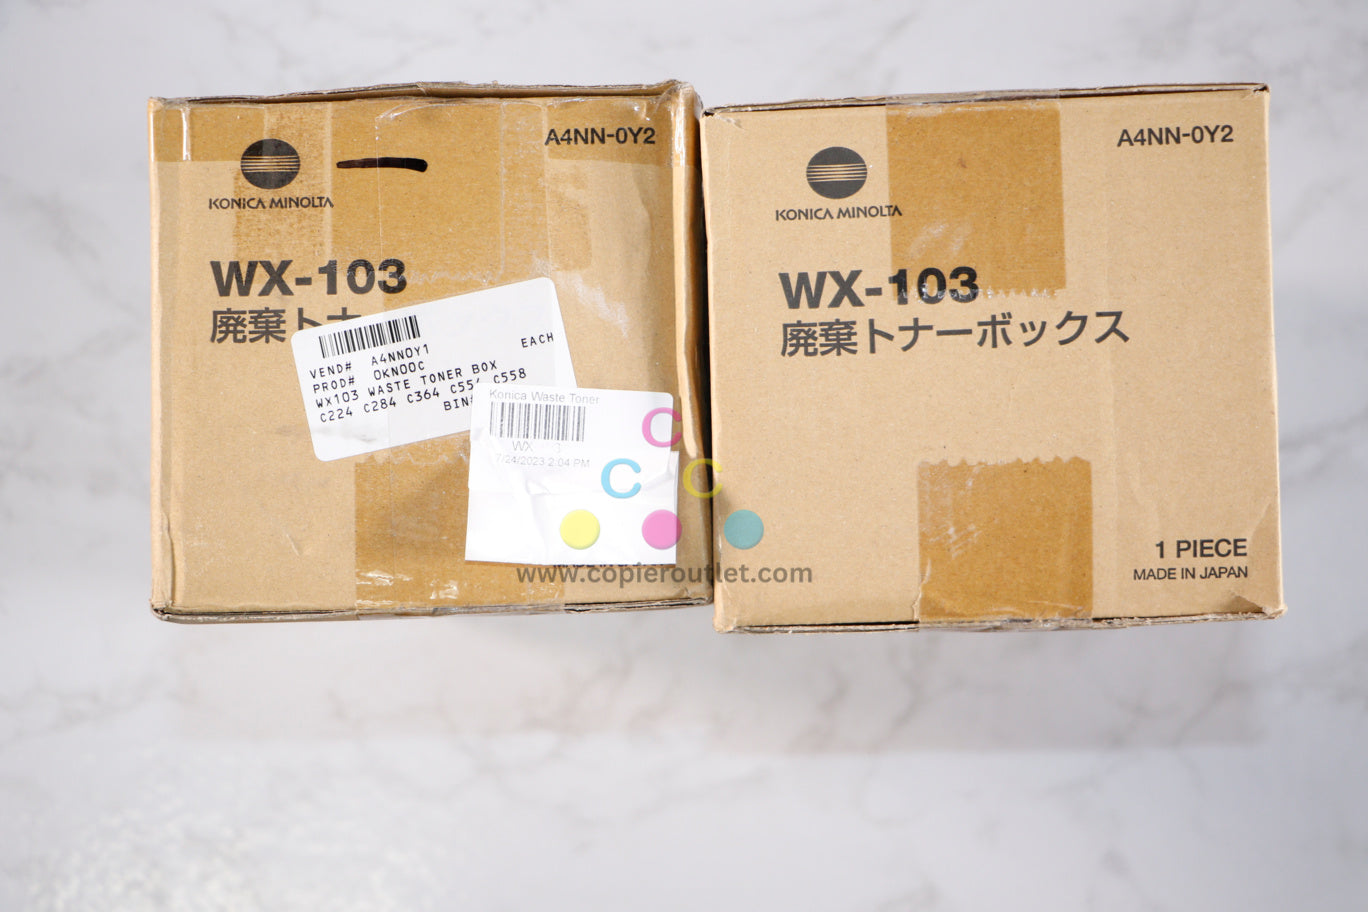 2 New OEM Konica BHC554,C454,C364,C284,C224 Waste Toner Box WX-103 / A4NN-0Y2